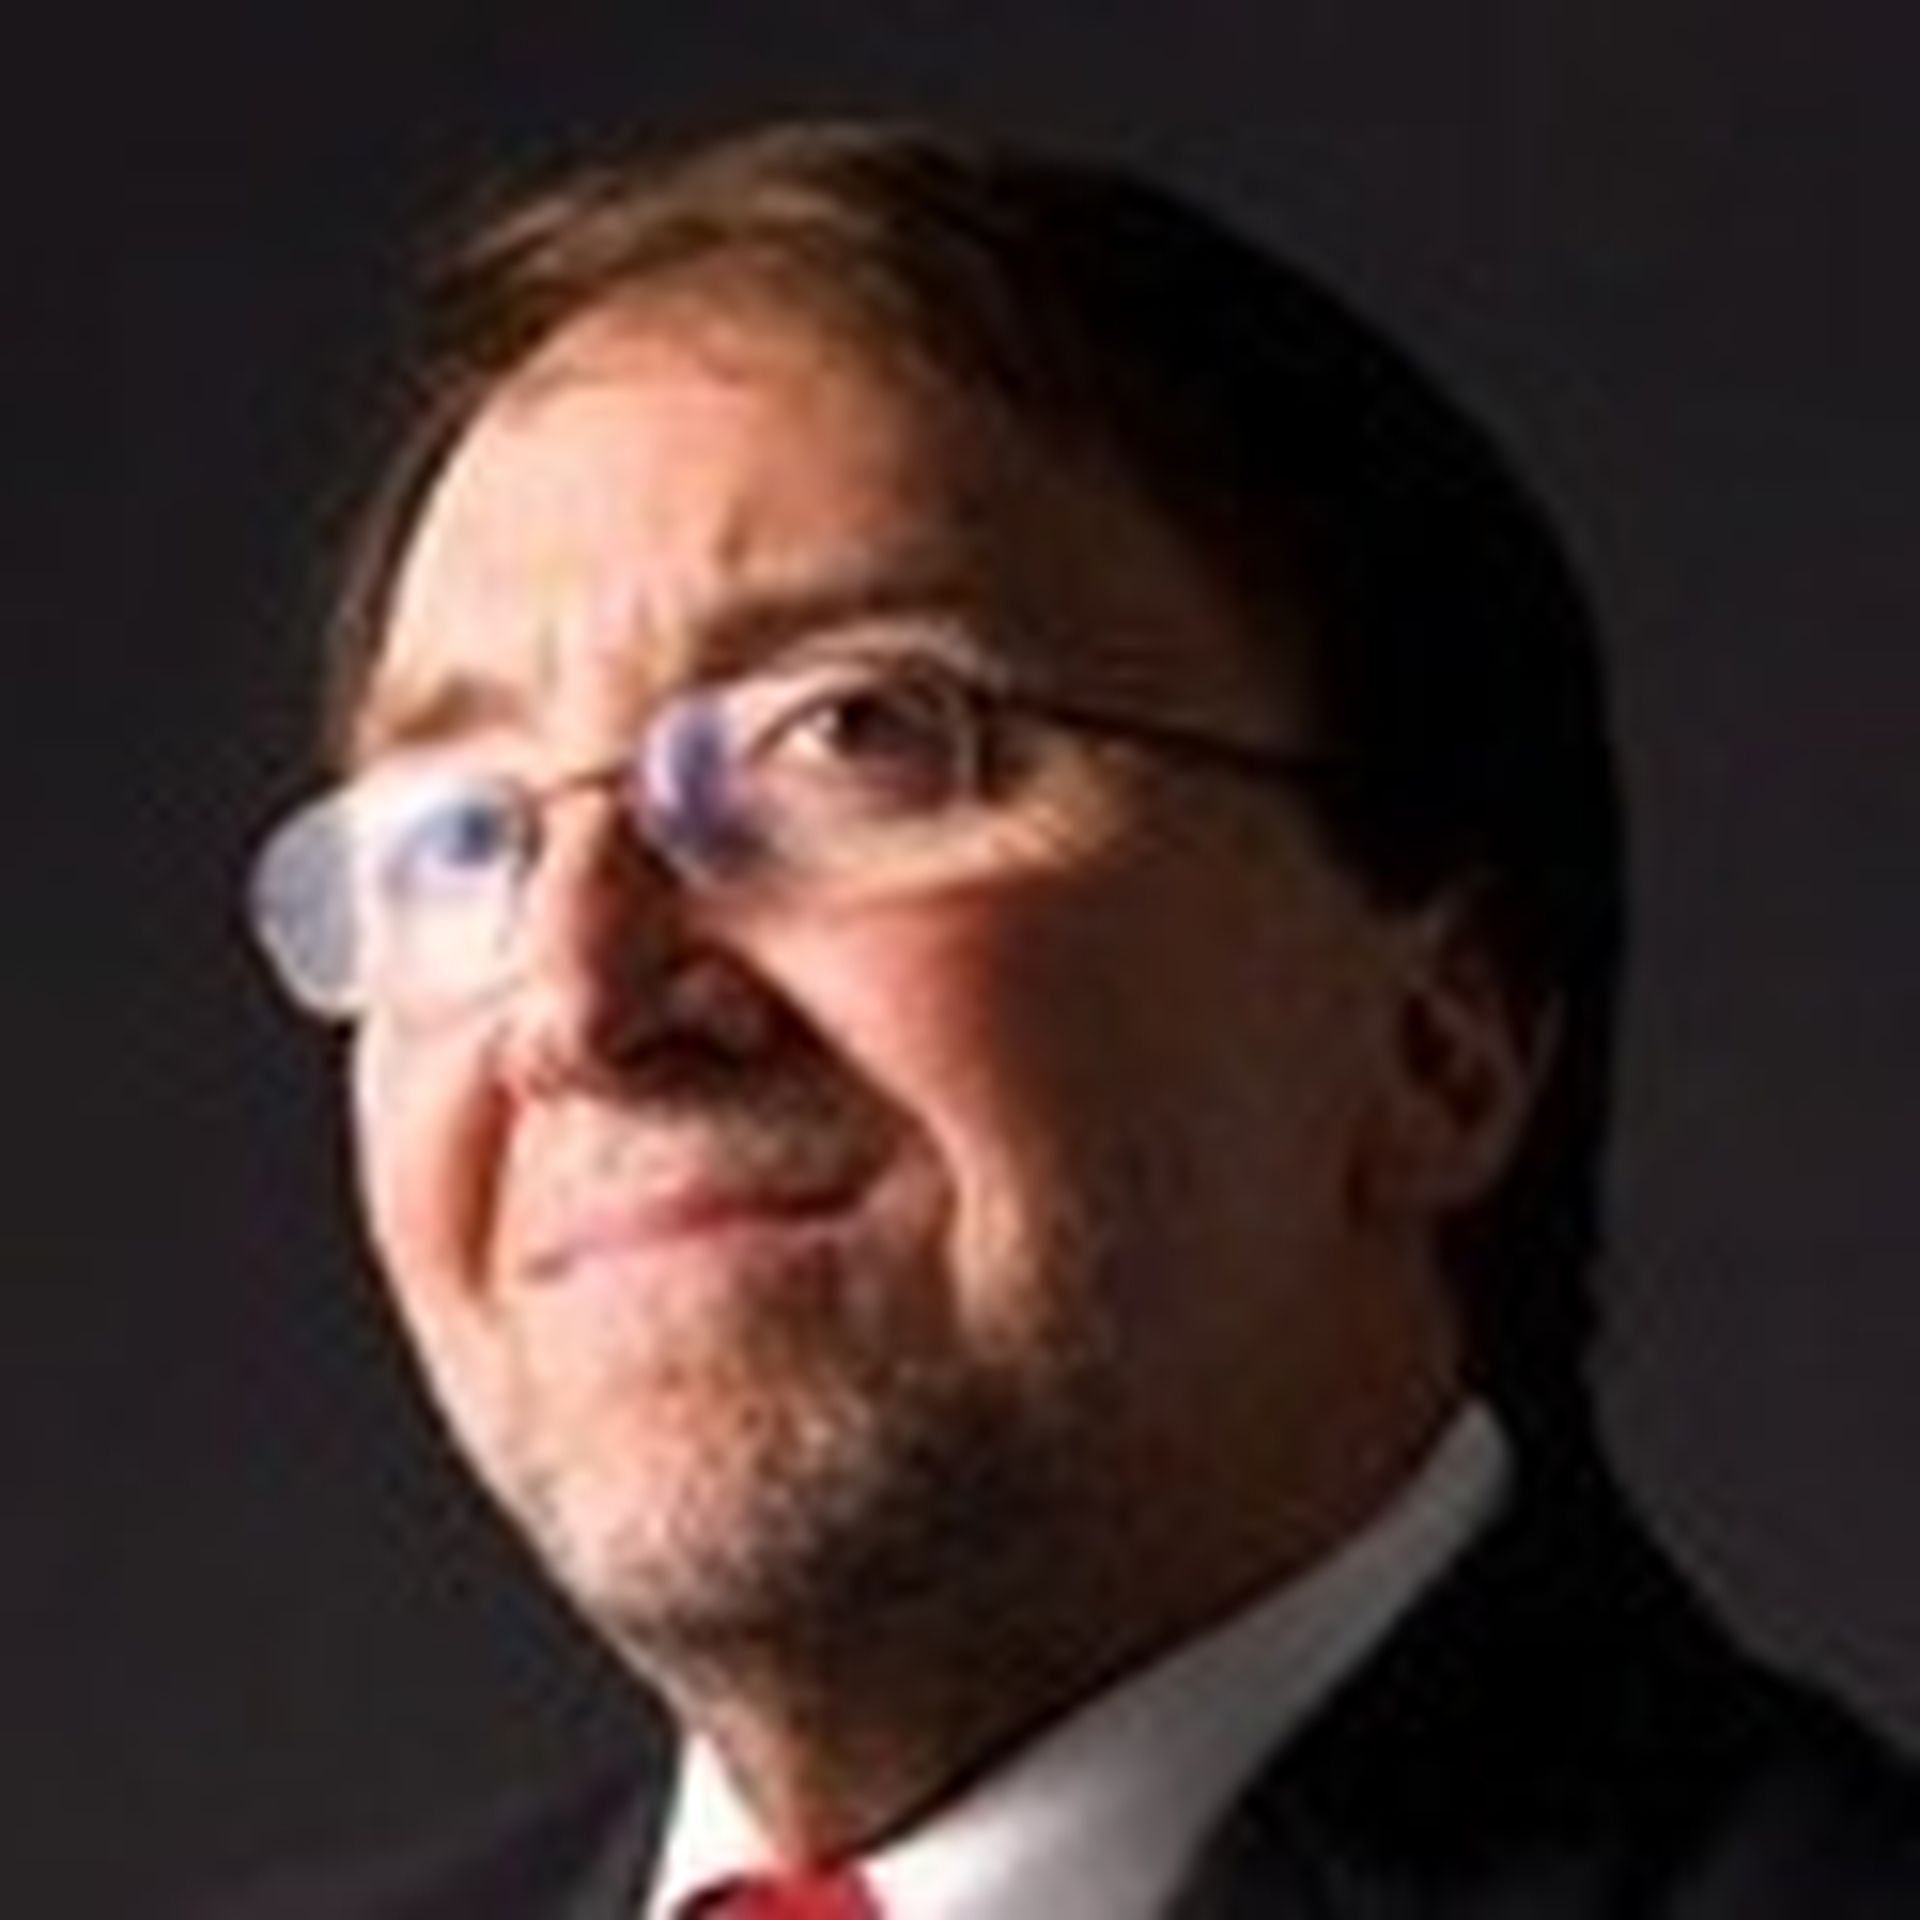 CenturyLink CEO Glen Post